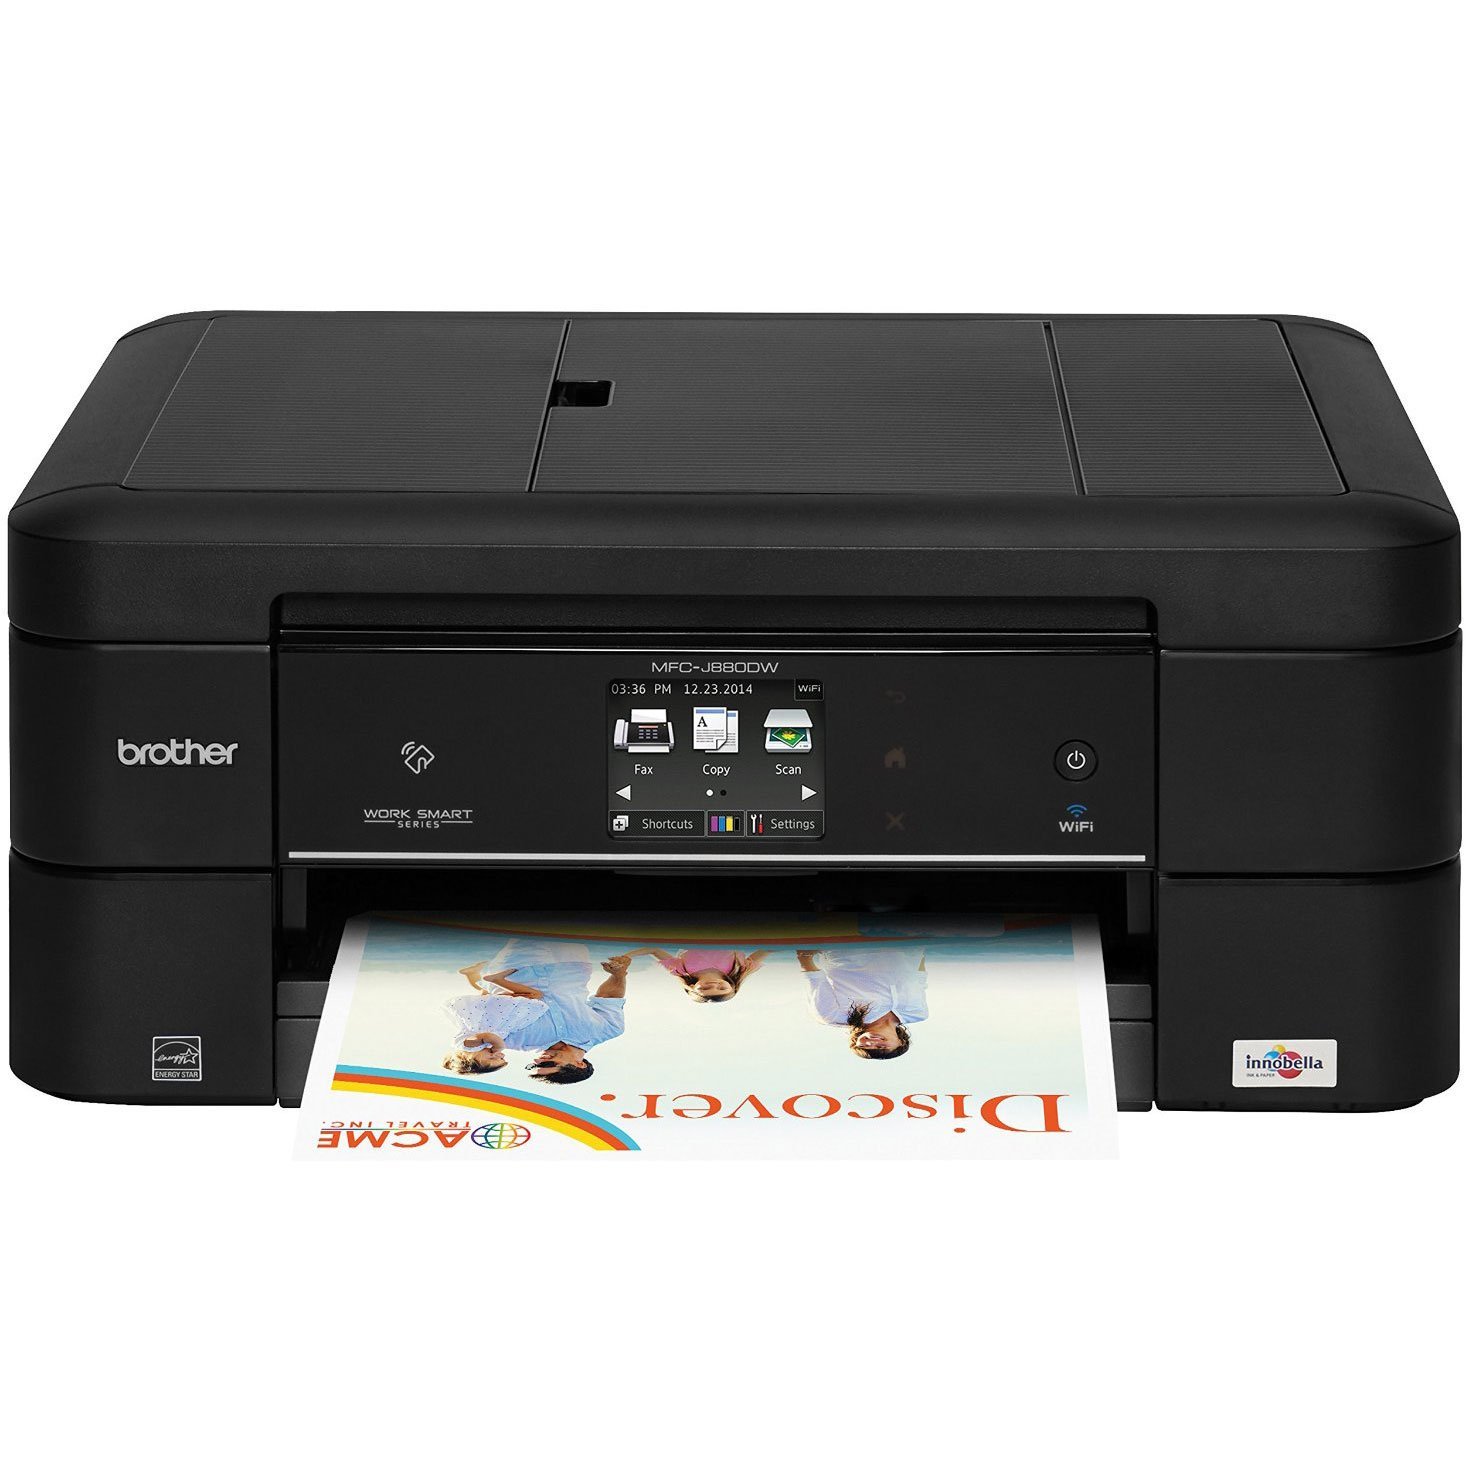 Brother Printer Brother MFC-J885DW Work Smart Inkjet Tout-en-un